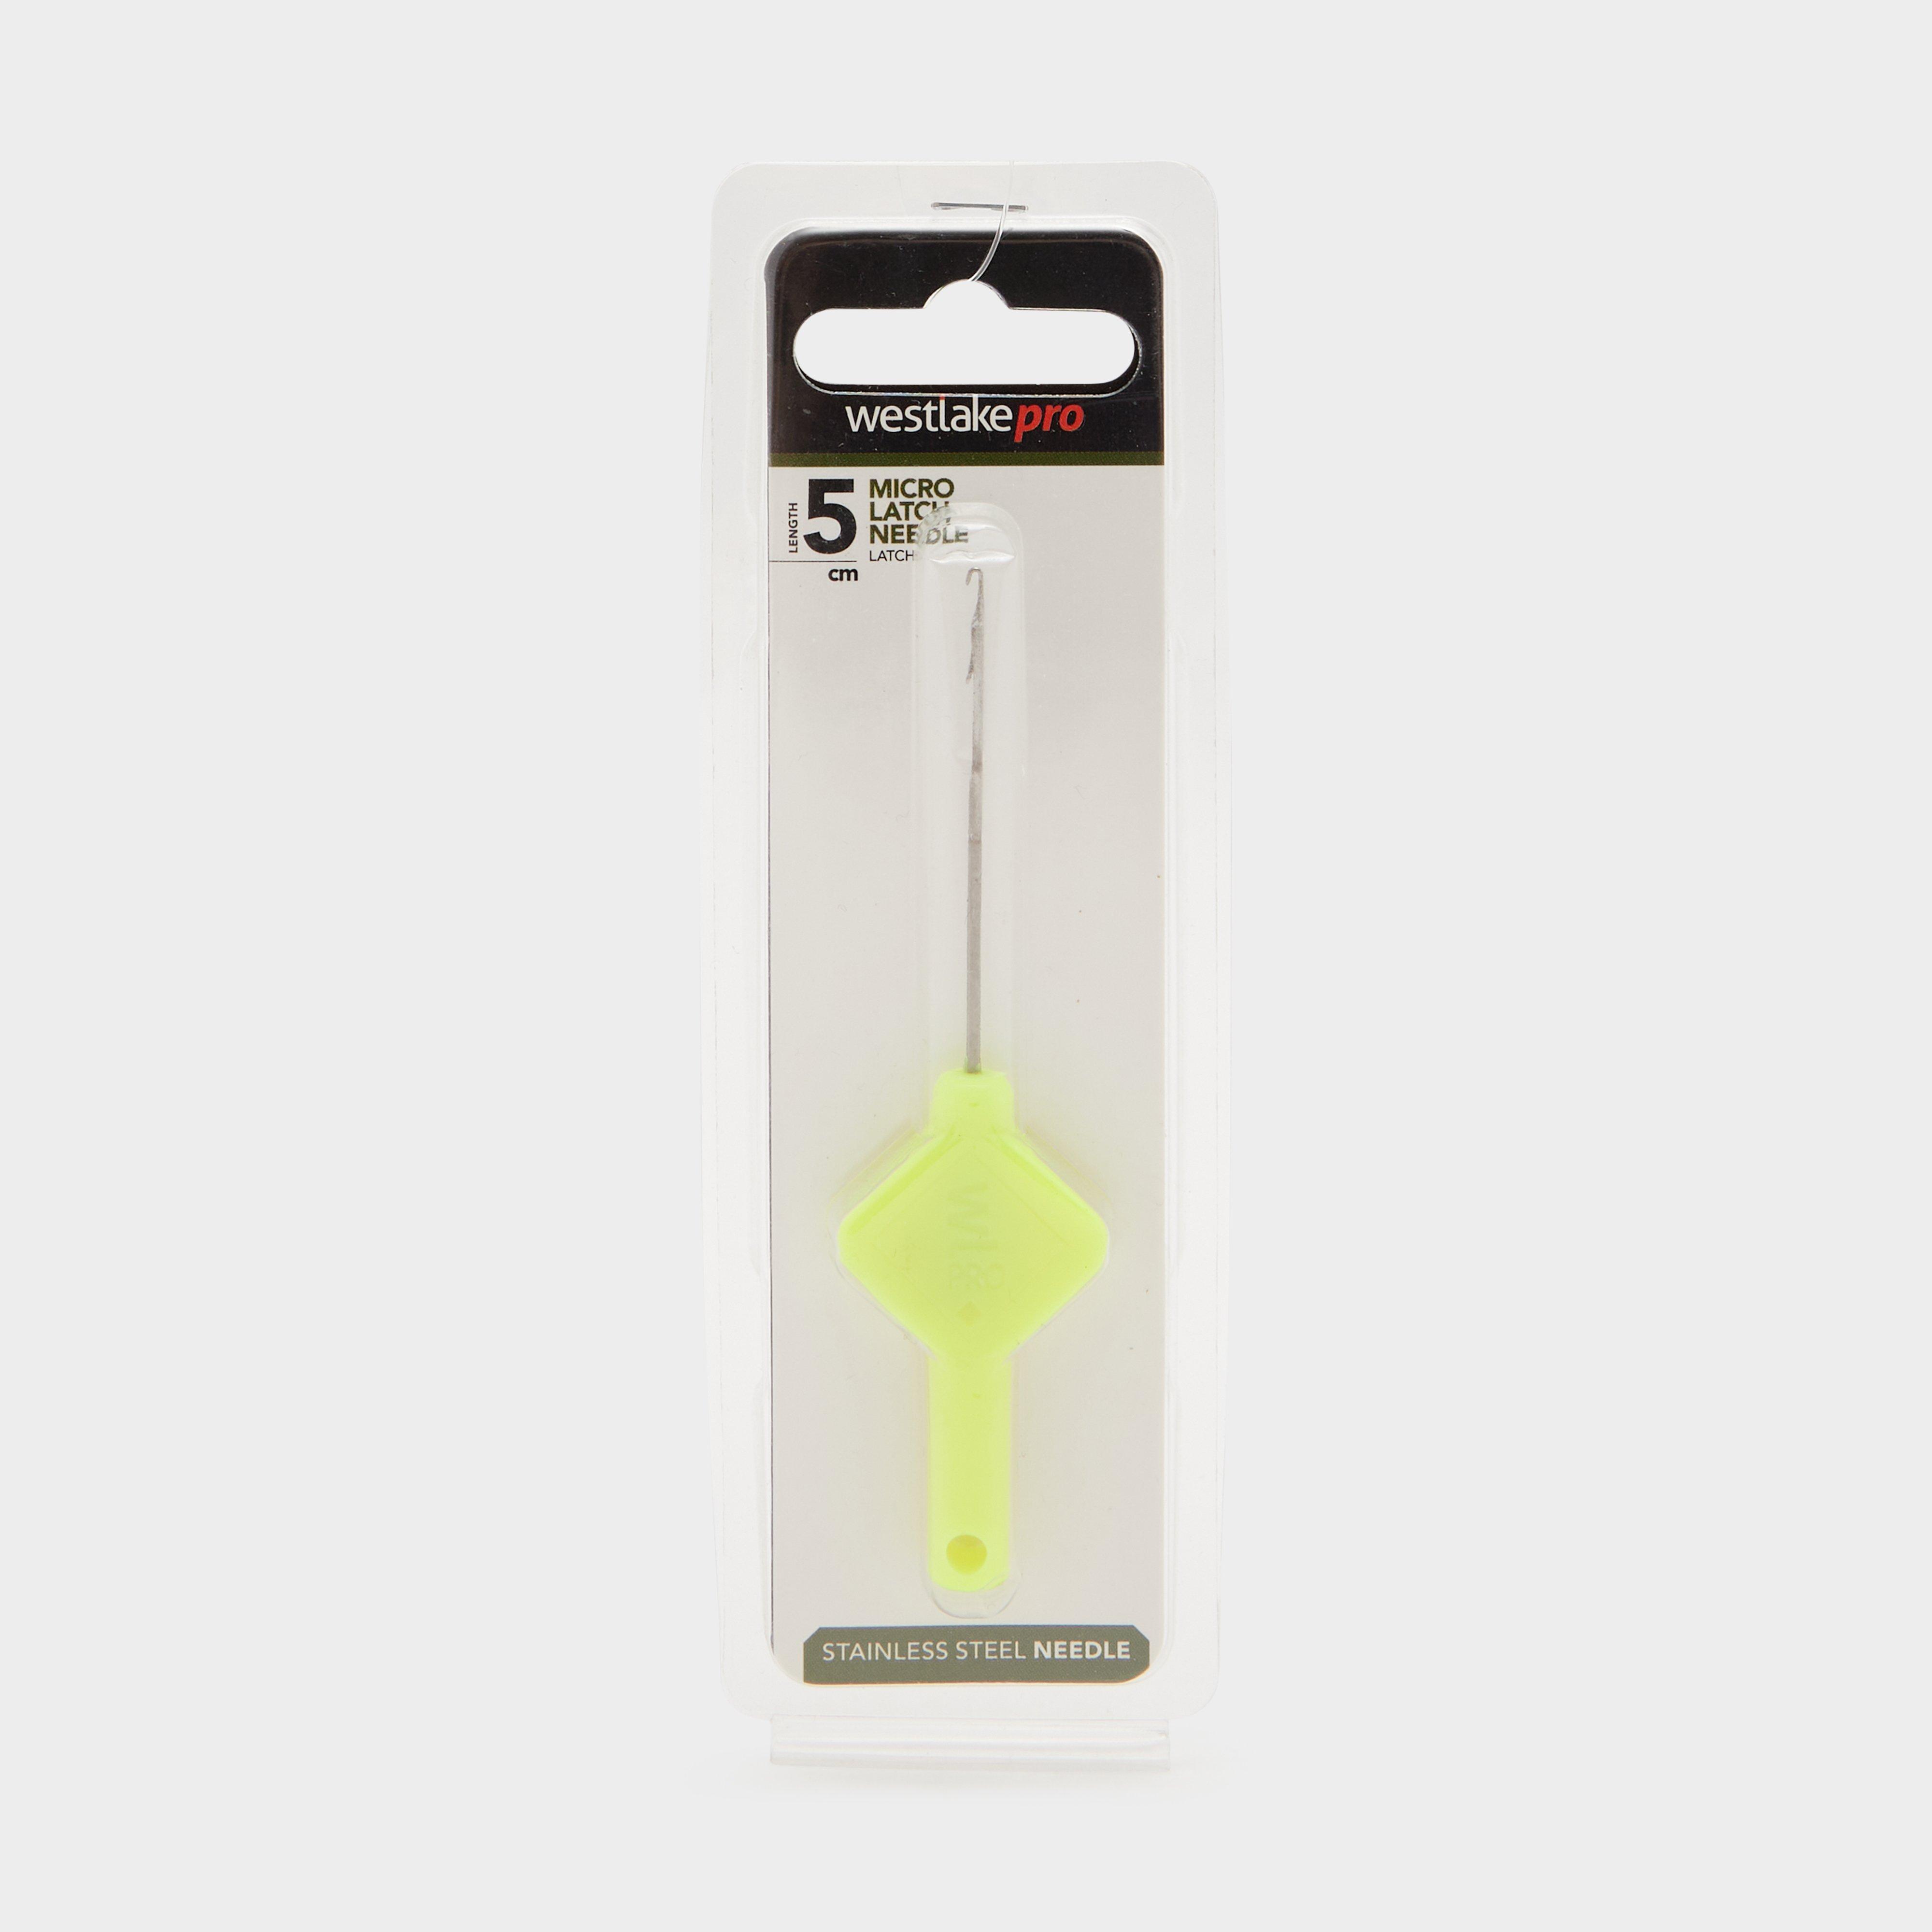 Westlake Micro Latch Needle 5cm - Silver/ne  Silver/ne